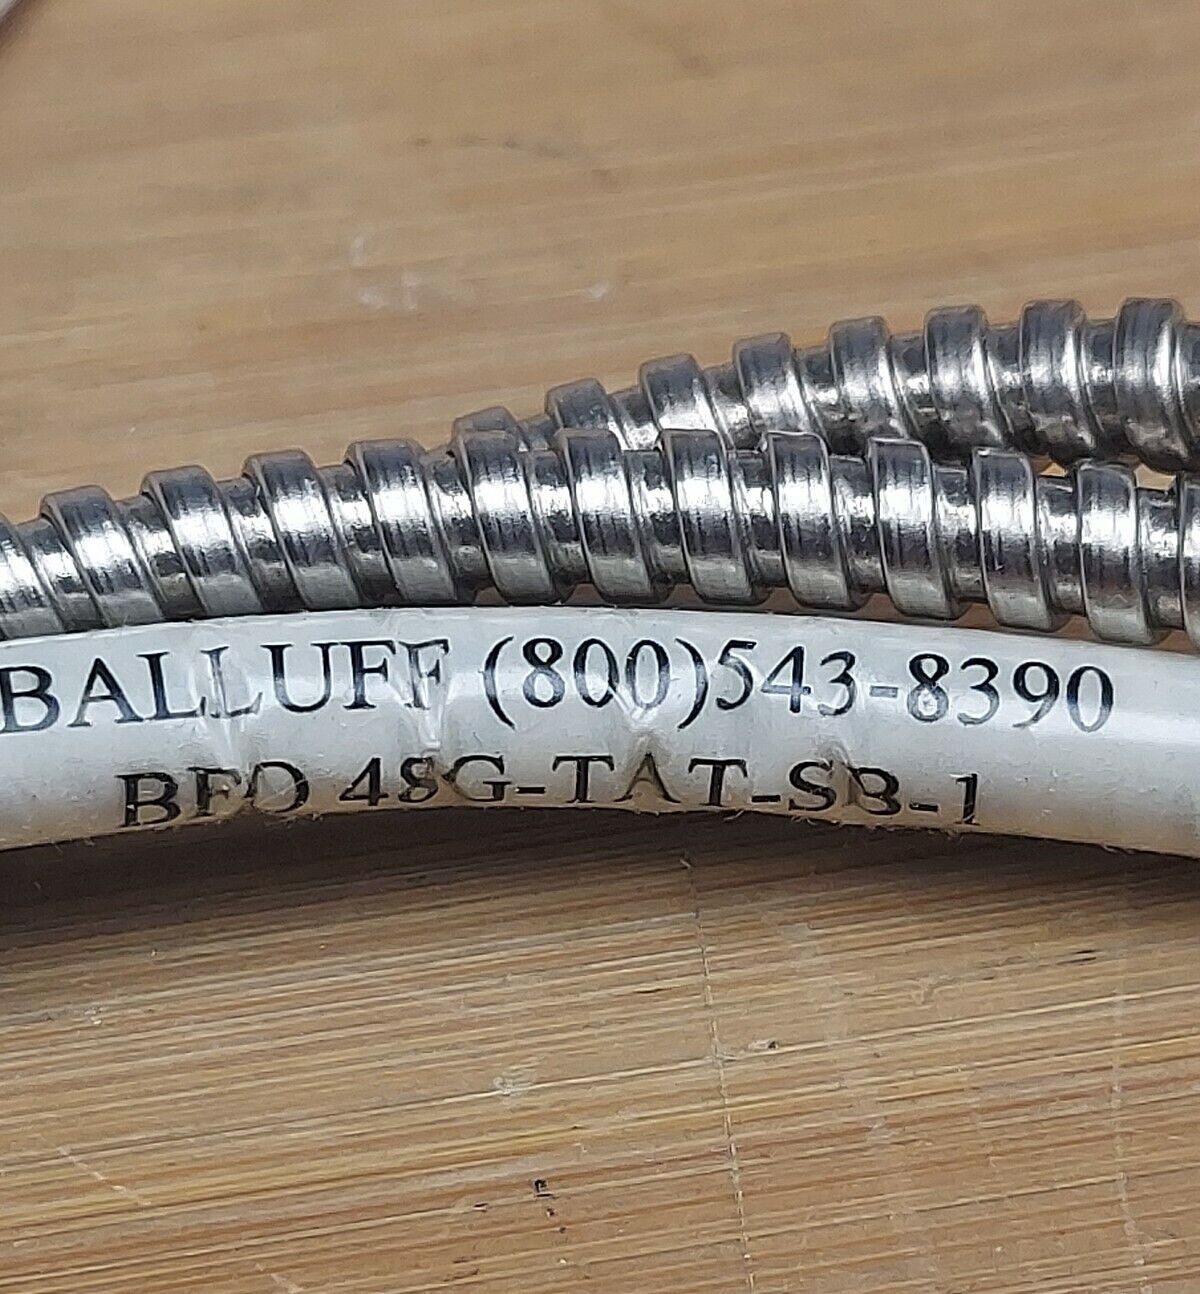 Balluff BFO-48G-TAT-SB-1 New Fiber Optic Cable 139637 (GR117) - 0